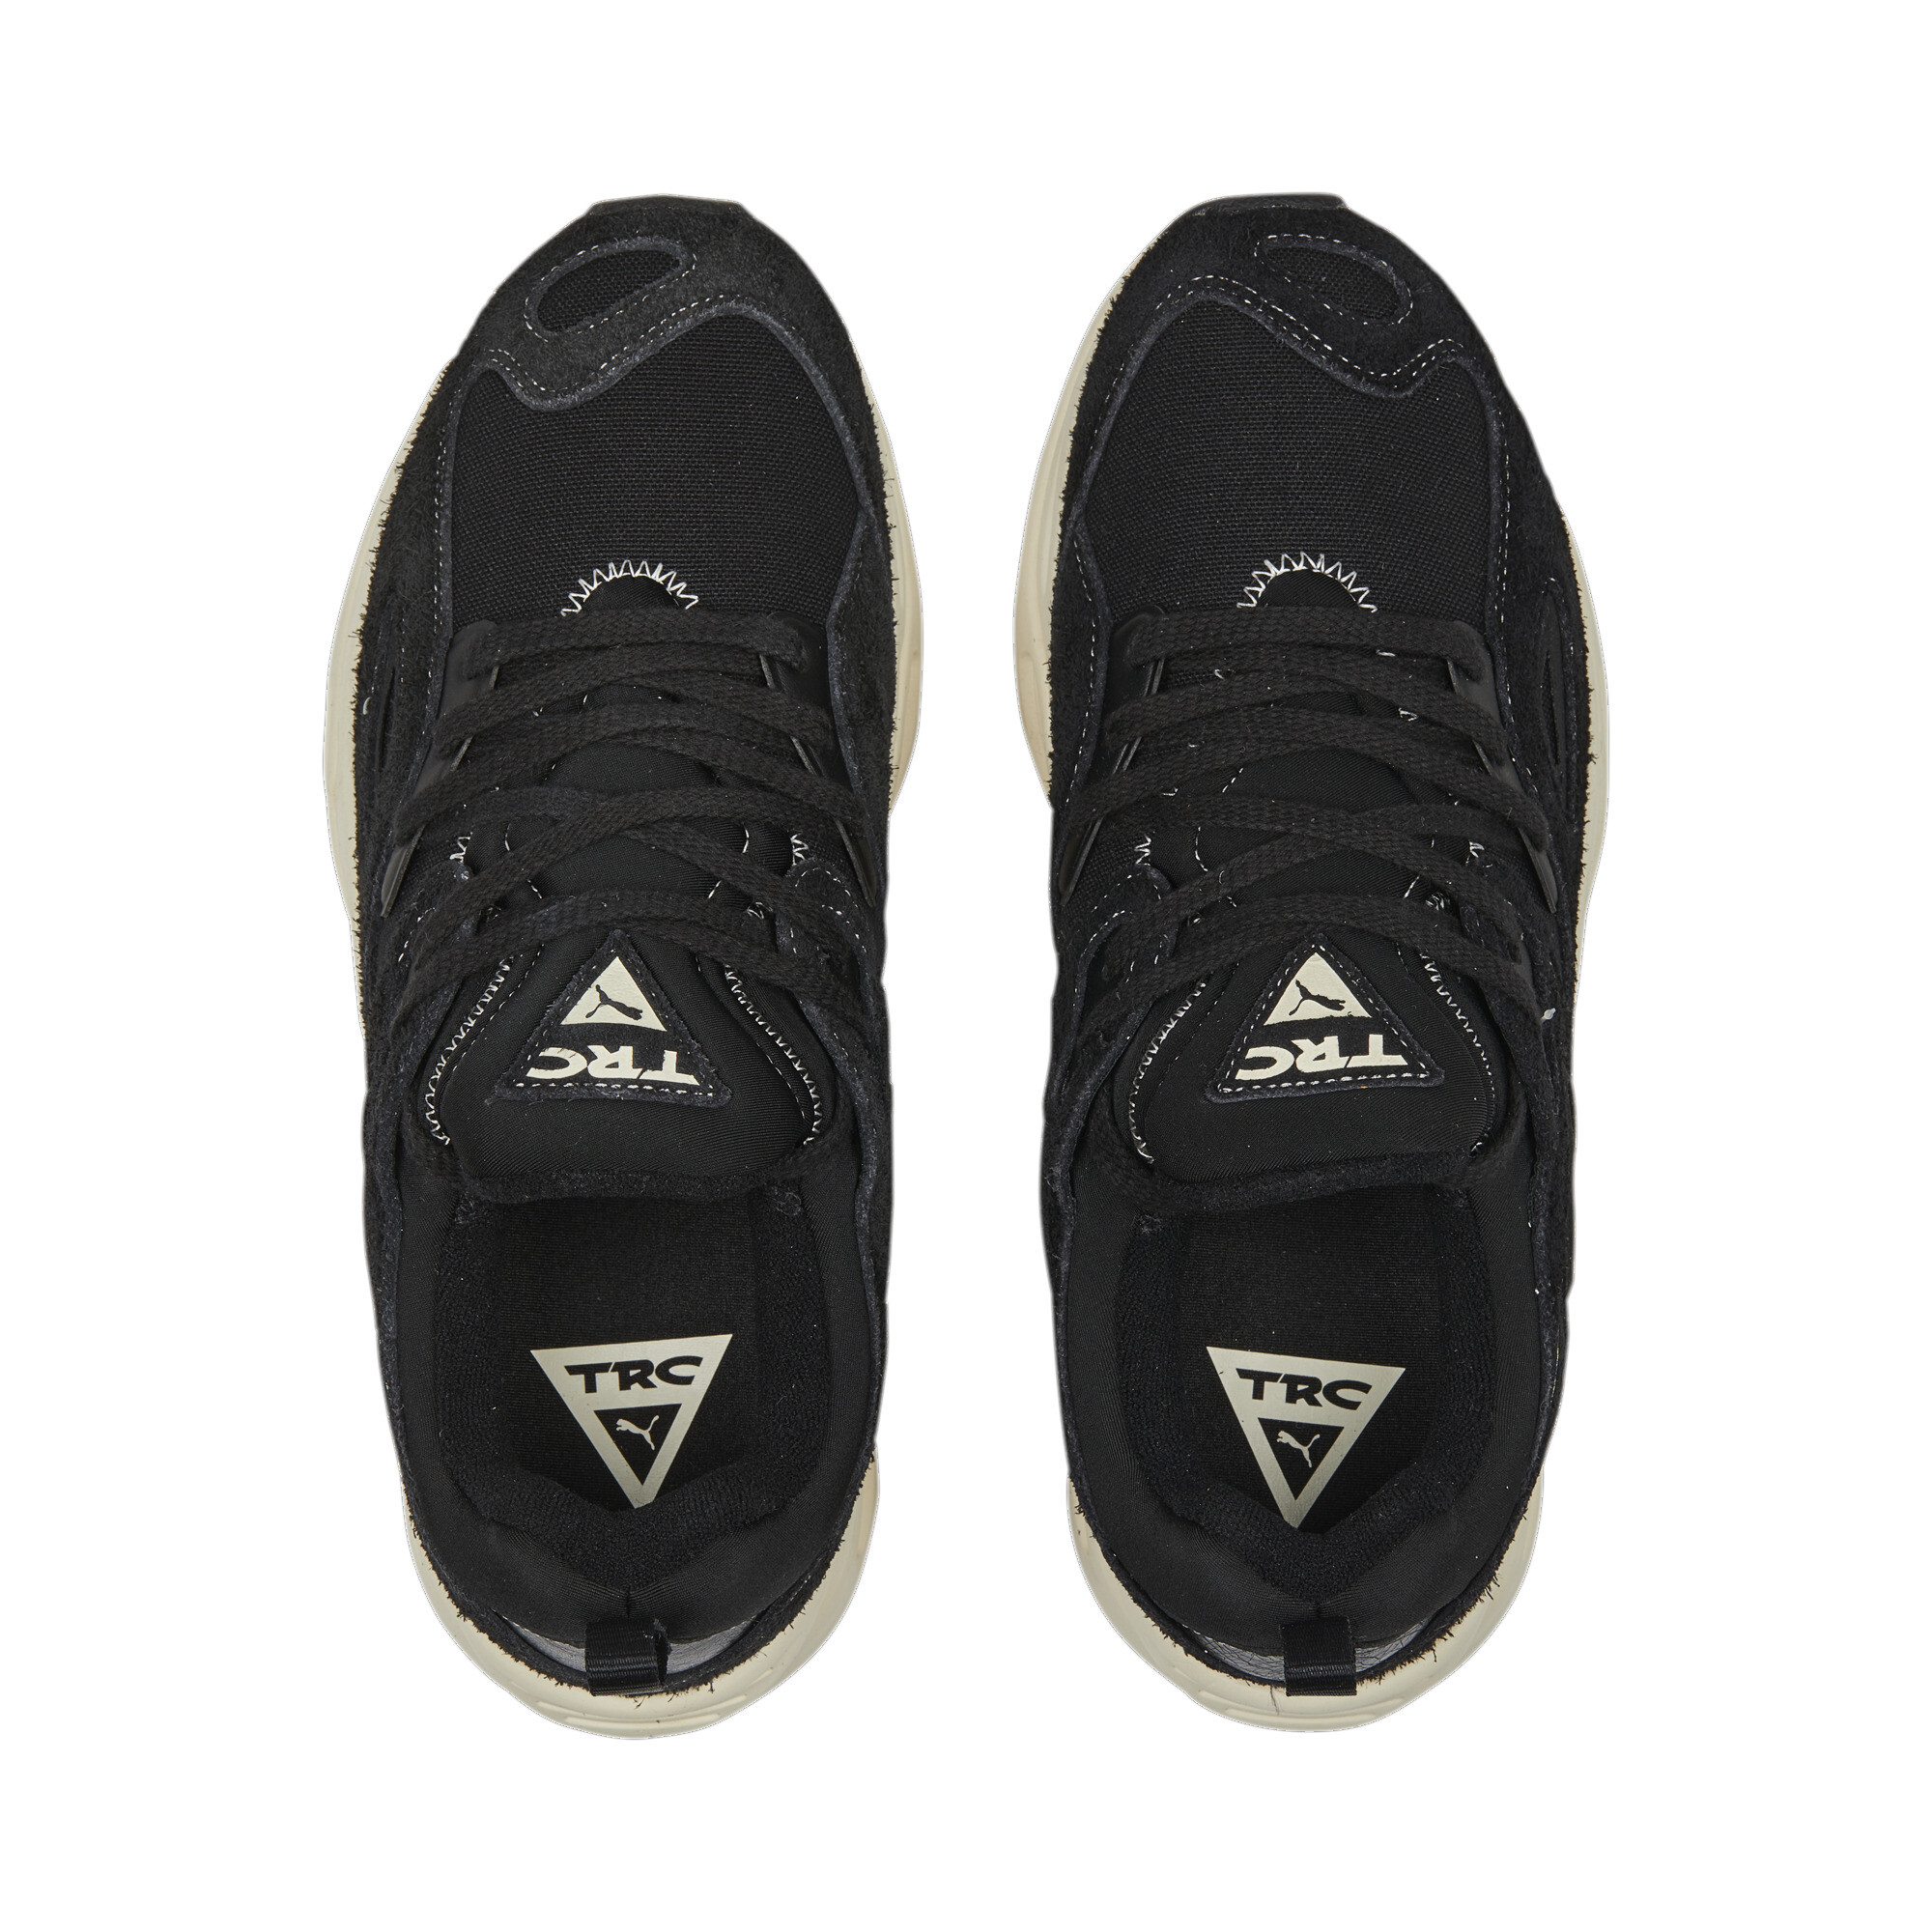 Men's PUMA TRC Blaze Worn Out Sneakers In 10 - Black, Size EU 40.5